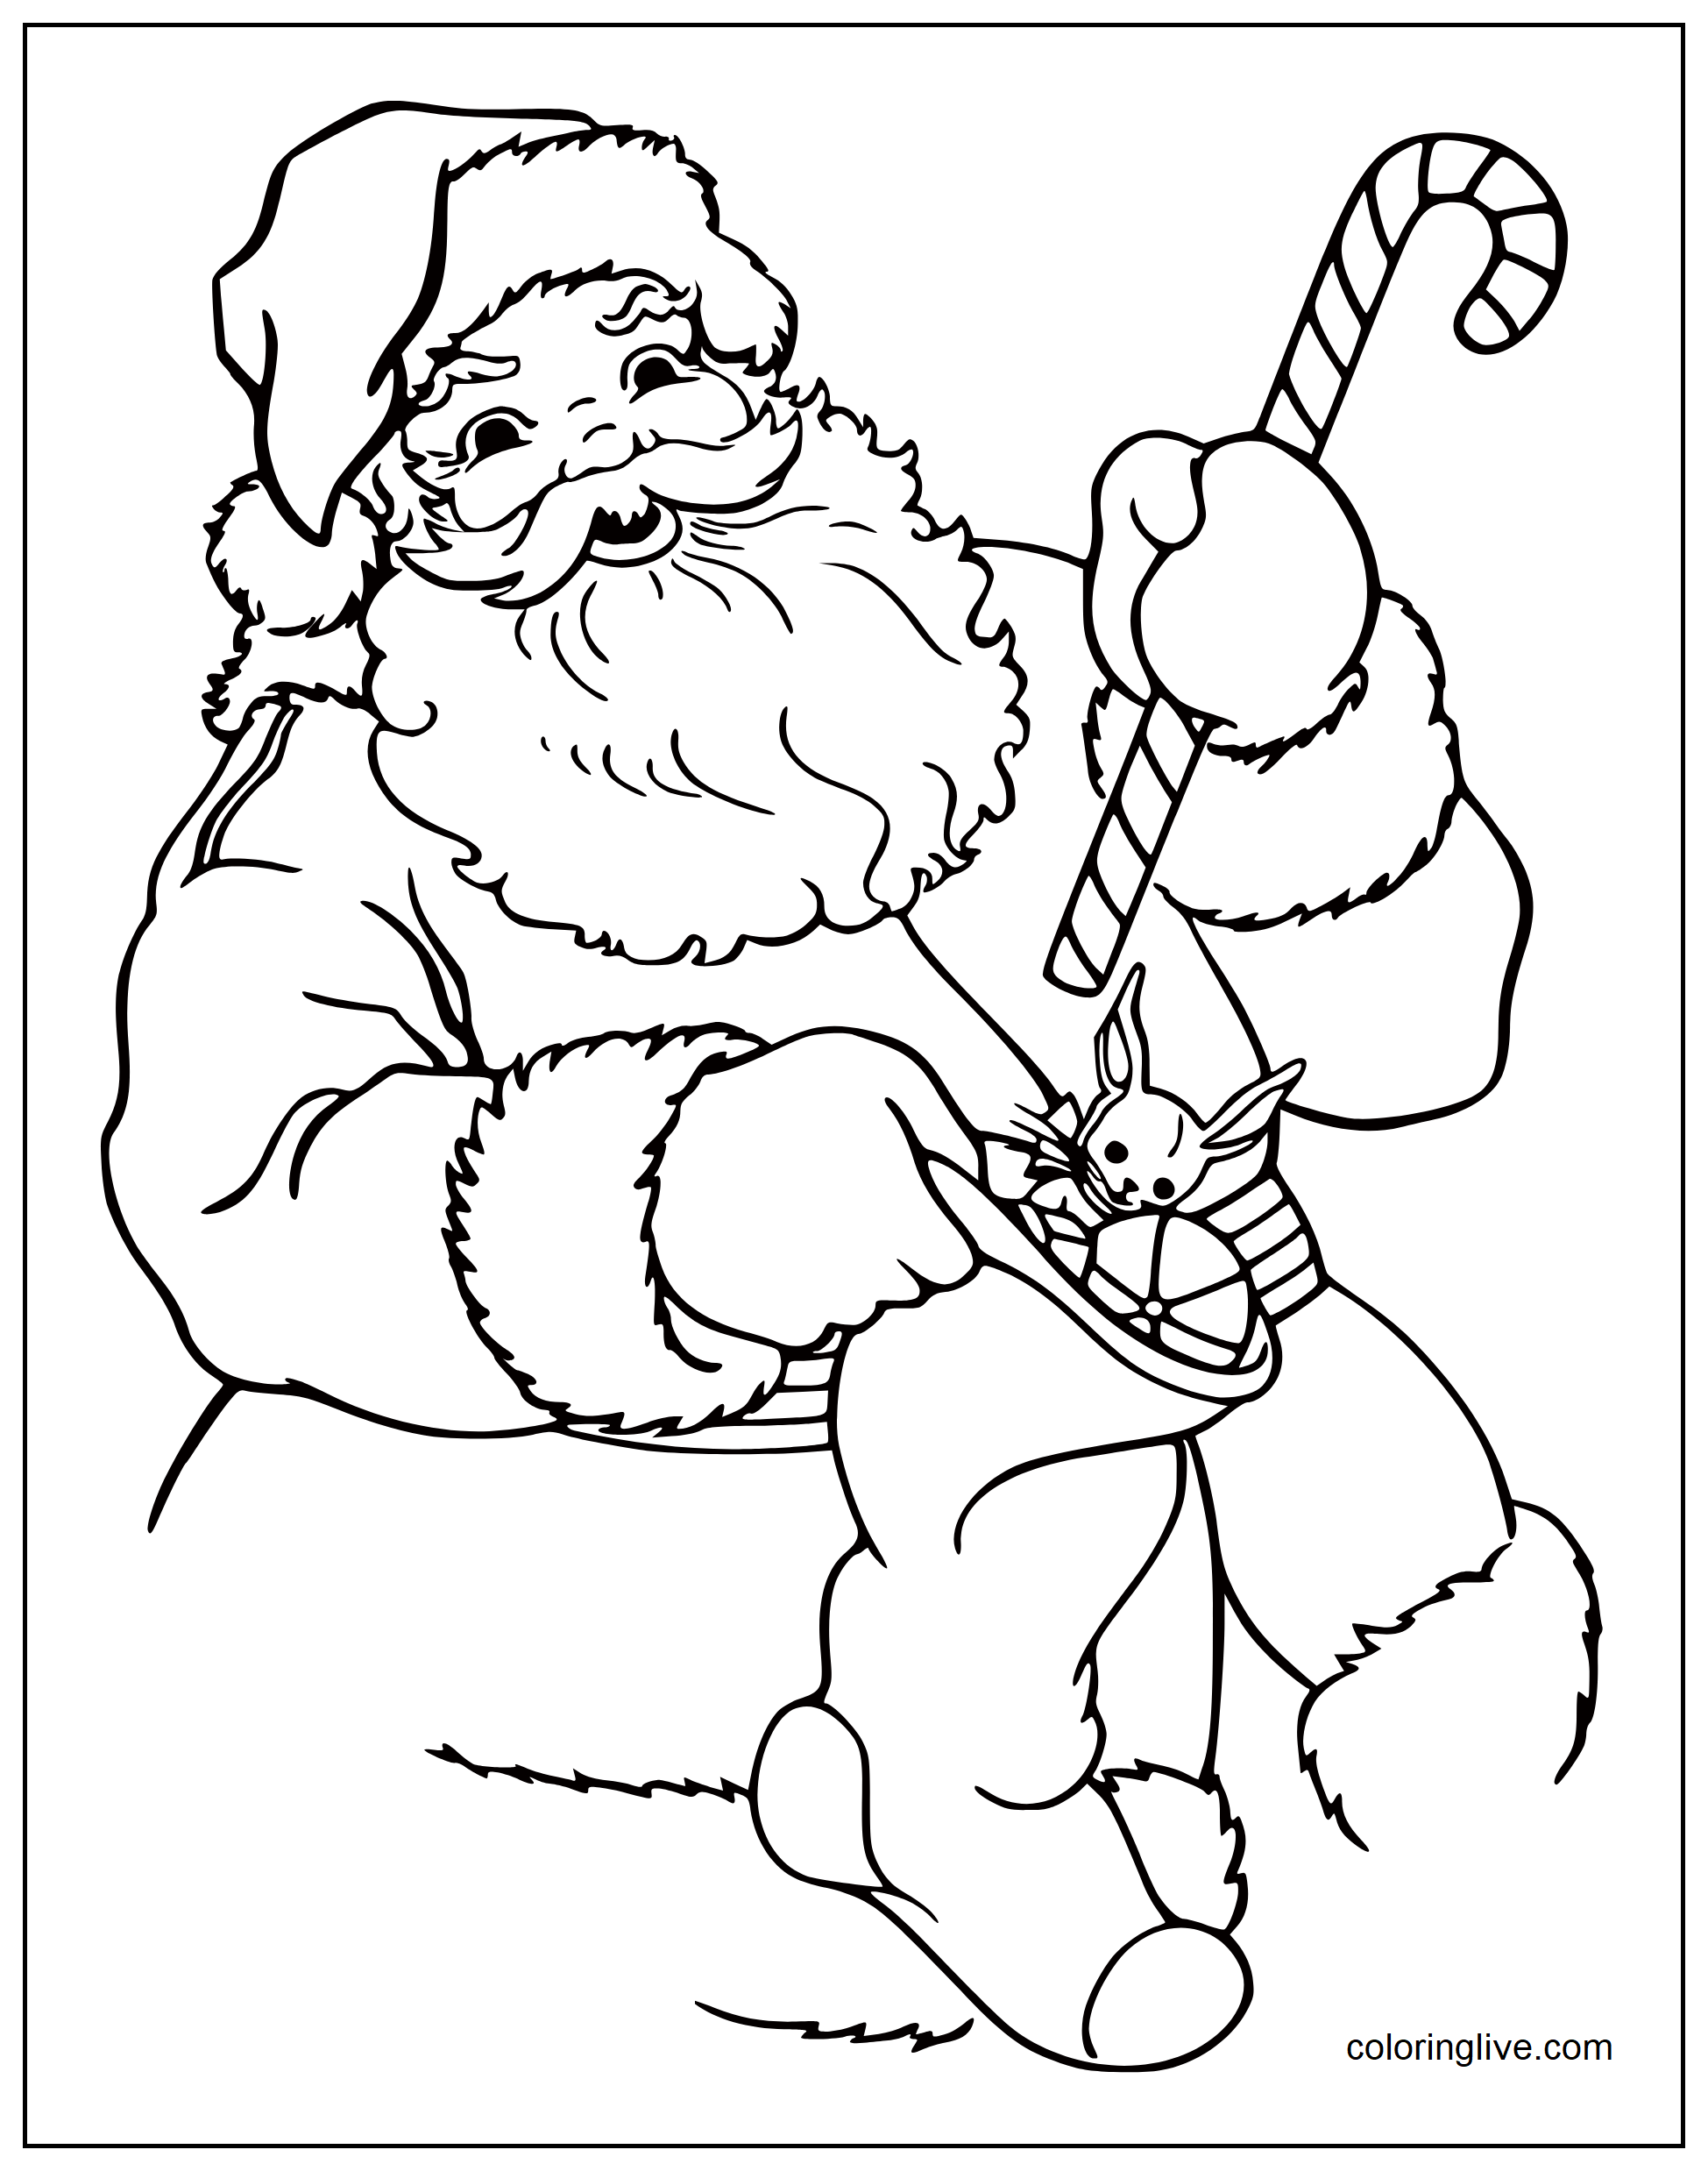 Printable santa's gift bag Coloring Page for kids.